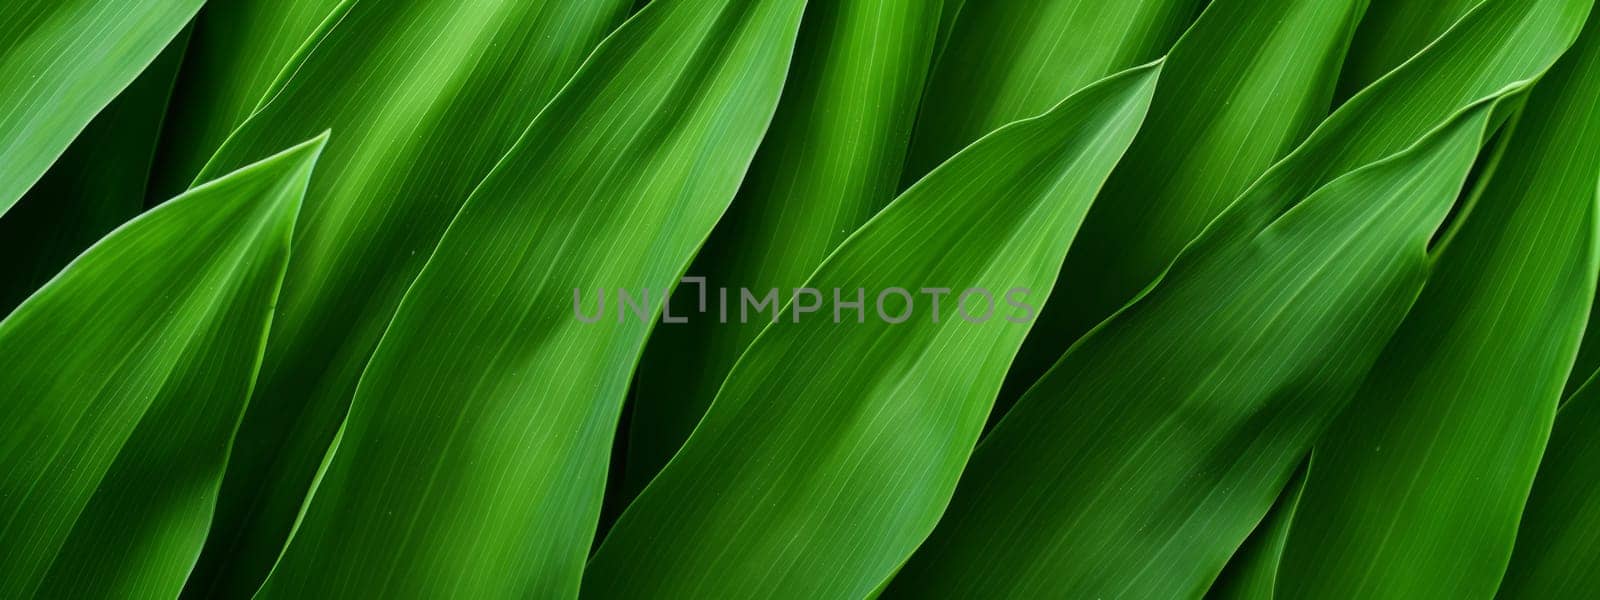 Green corn leaves macro seamless texture background